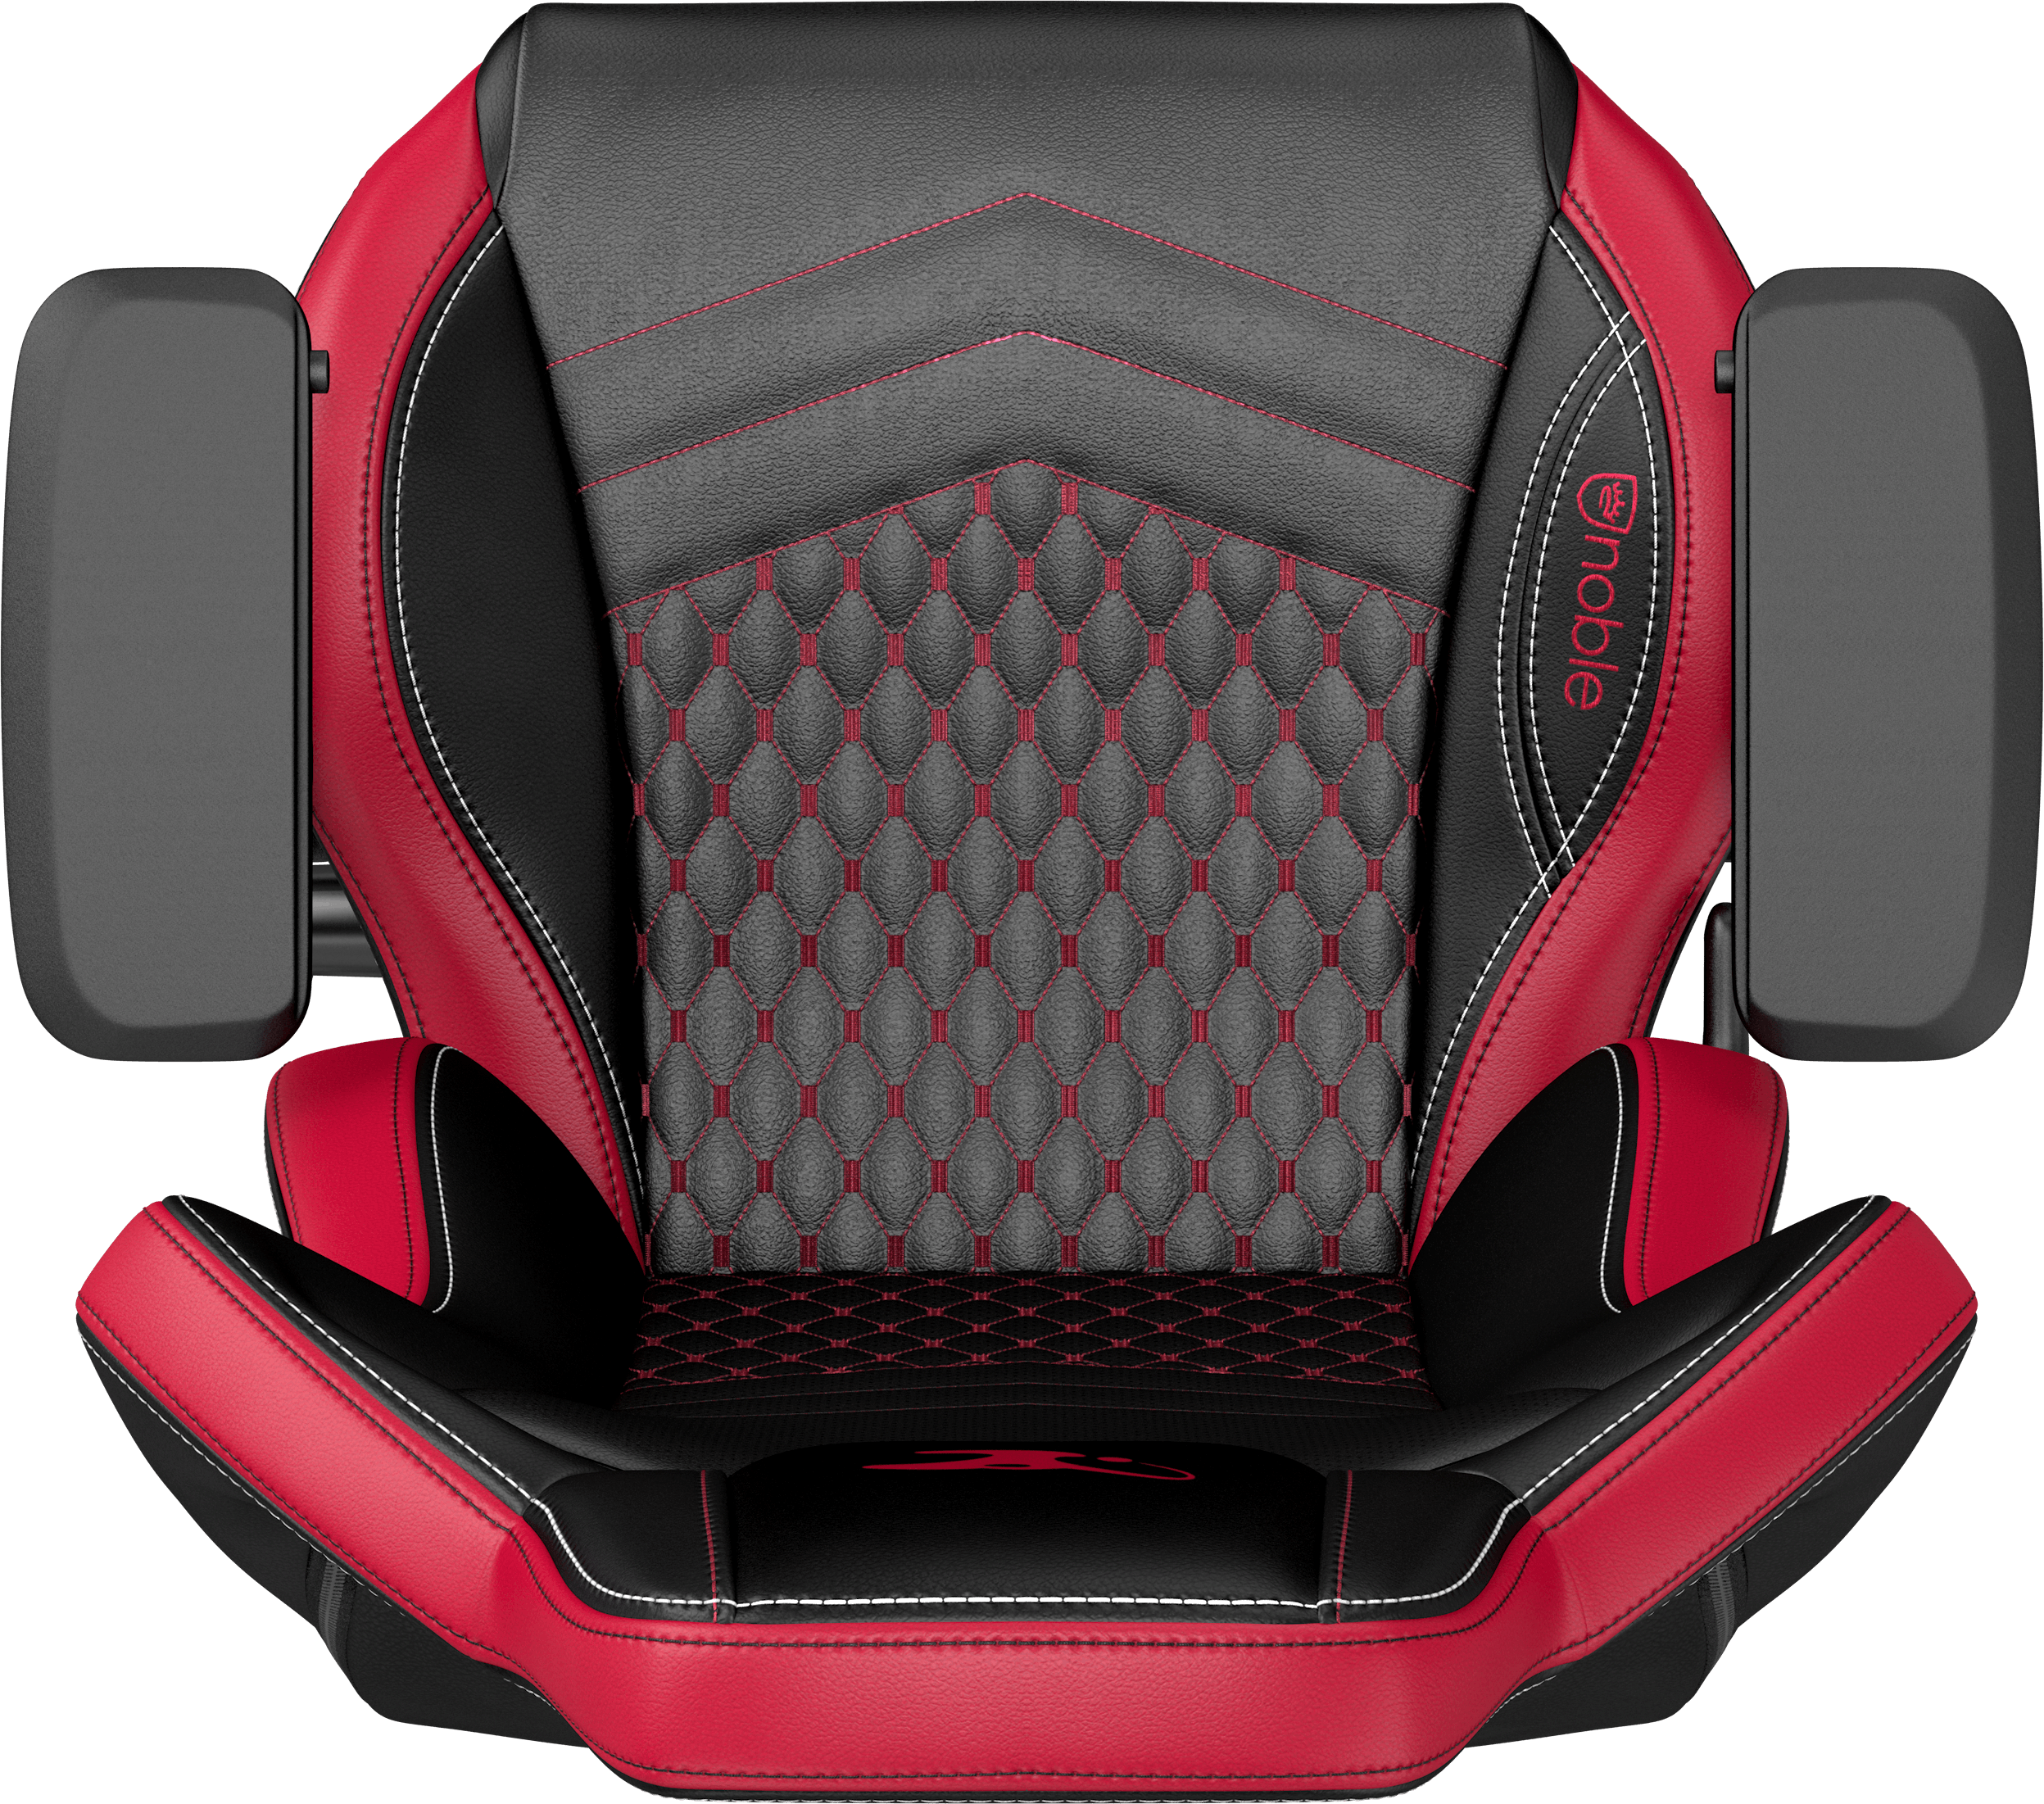 4D armrests EPIC Mousesports Edition